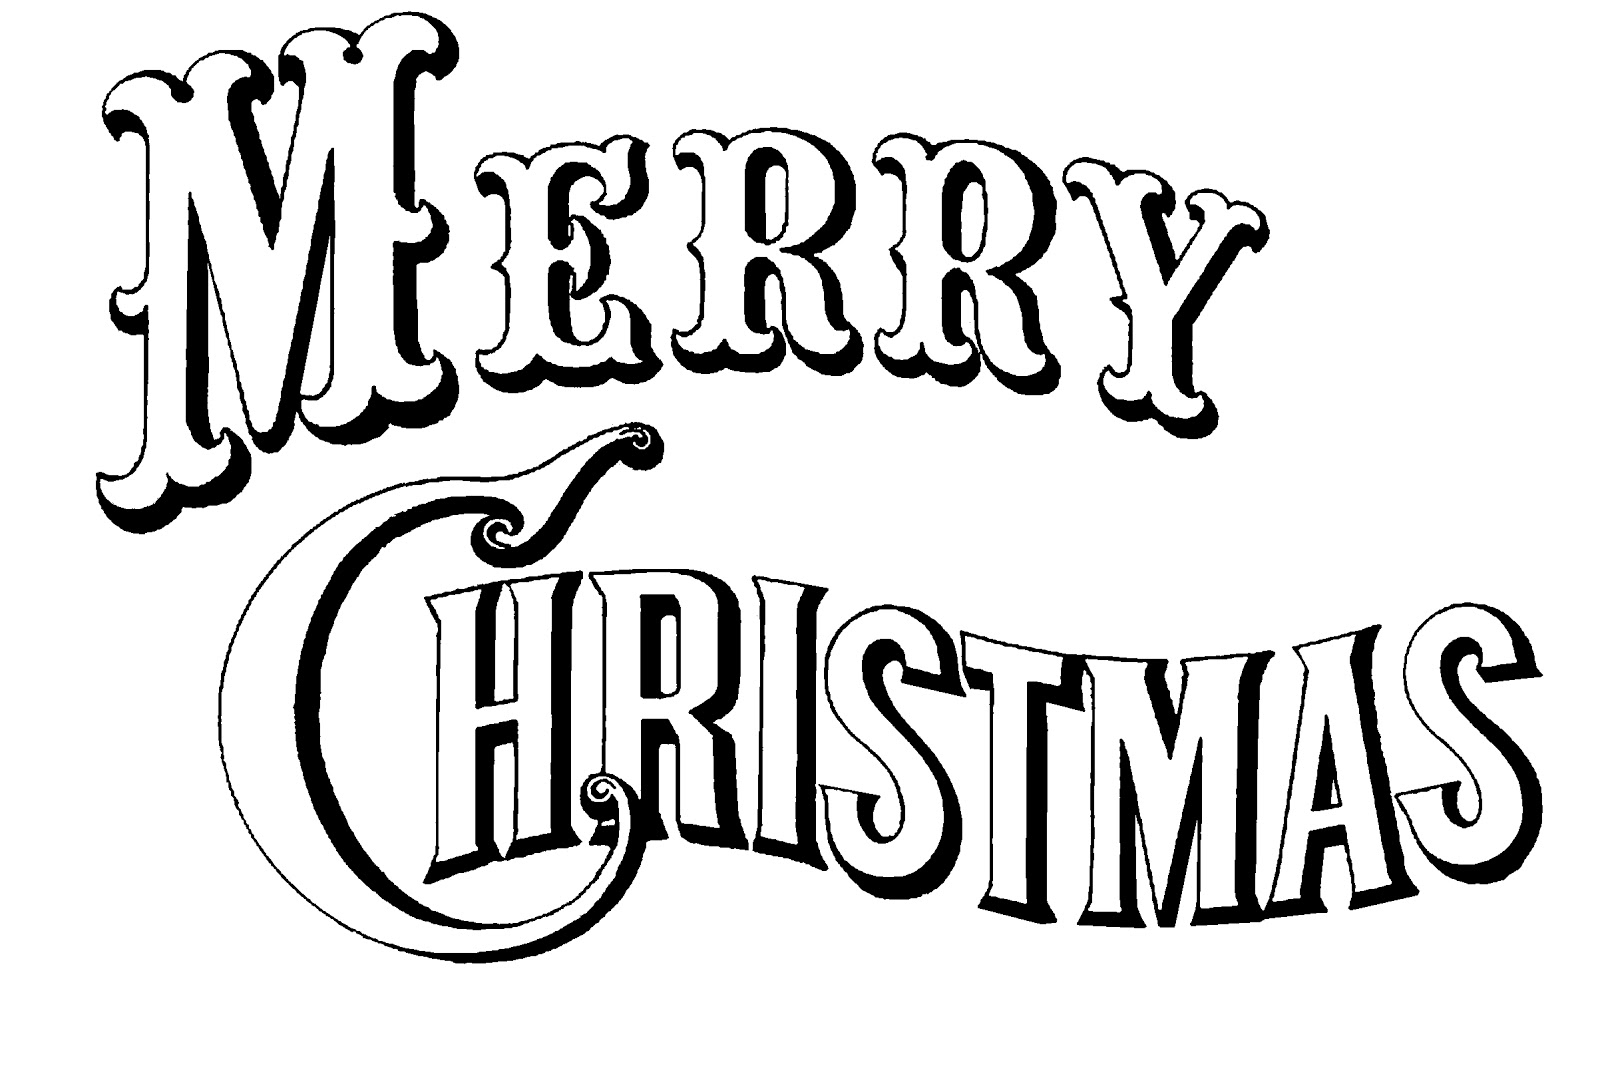 Black and white christmas clipart merry christmas - ClipartFox